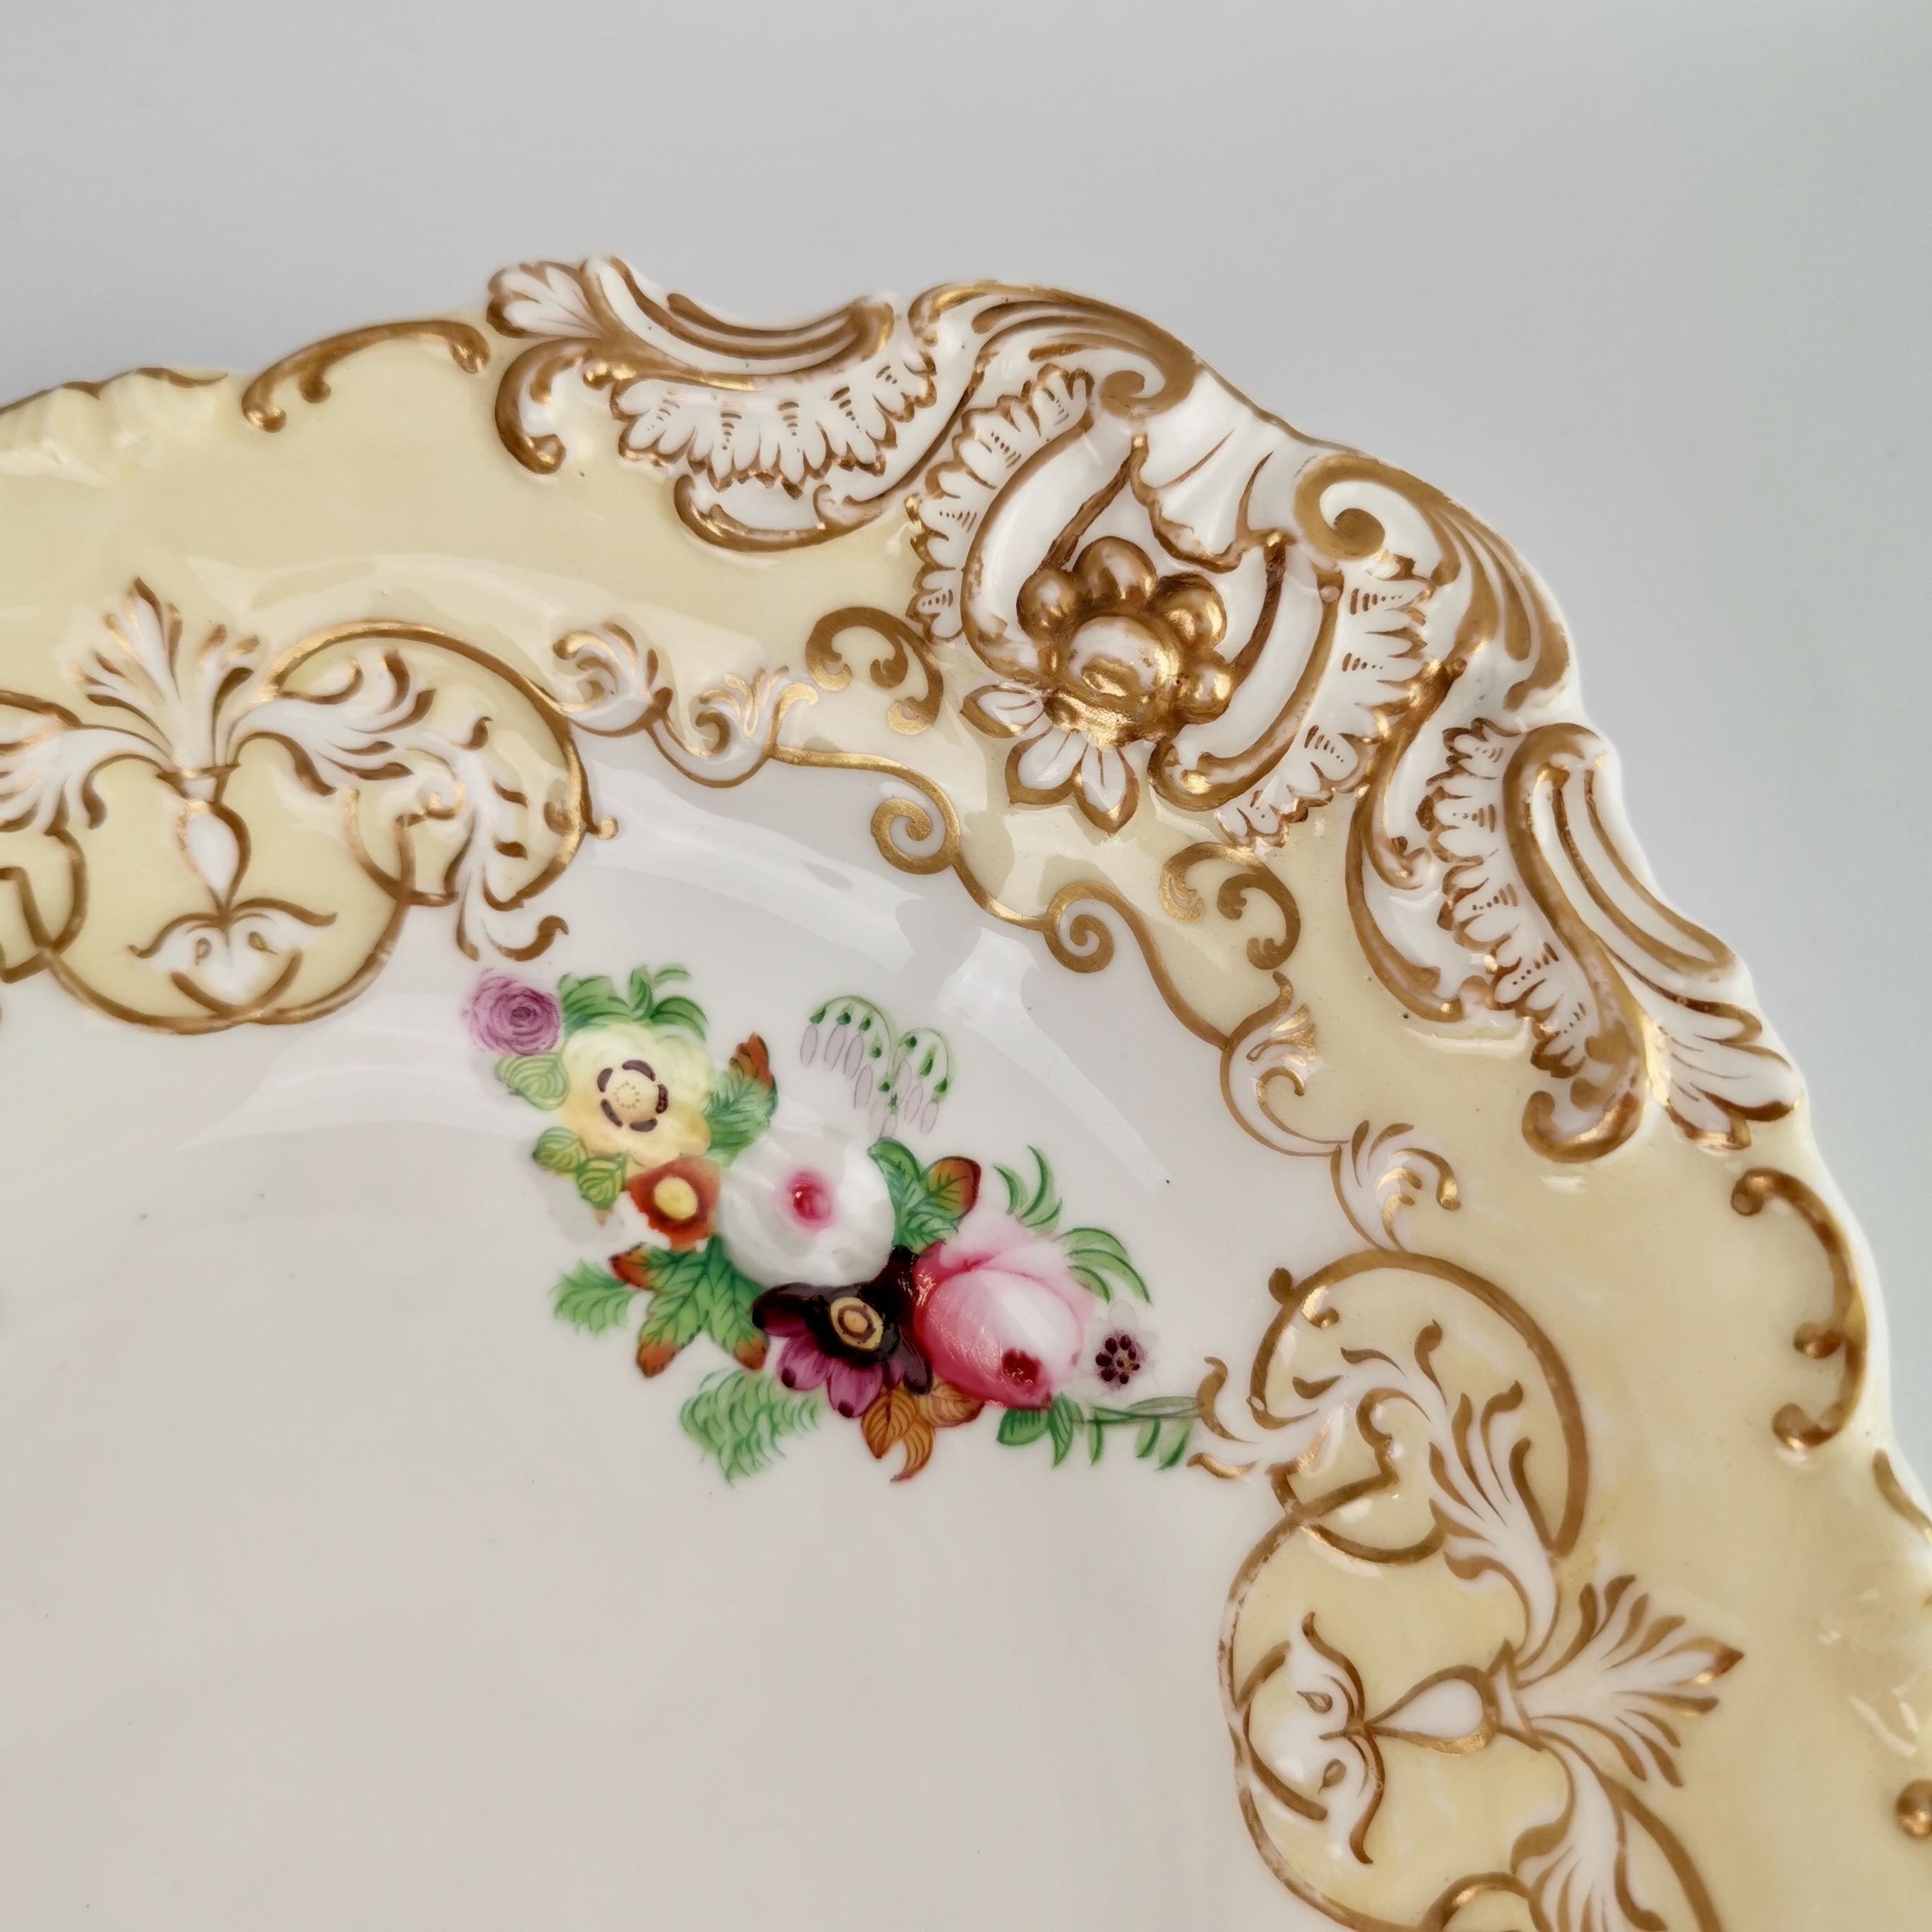 English Copeland & Garrett Porcelain Dessert Serving Set, Yellow with Flowers, 1833-1847